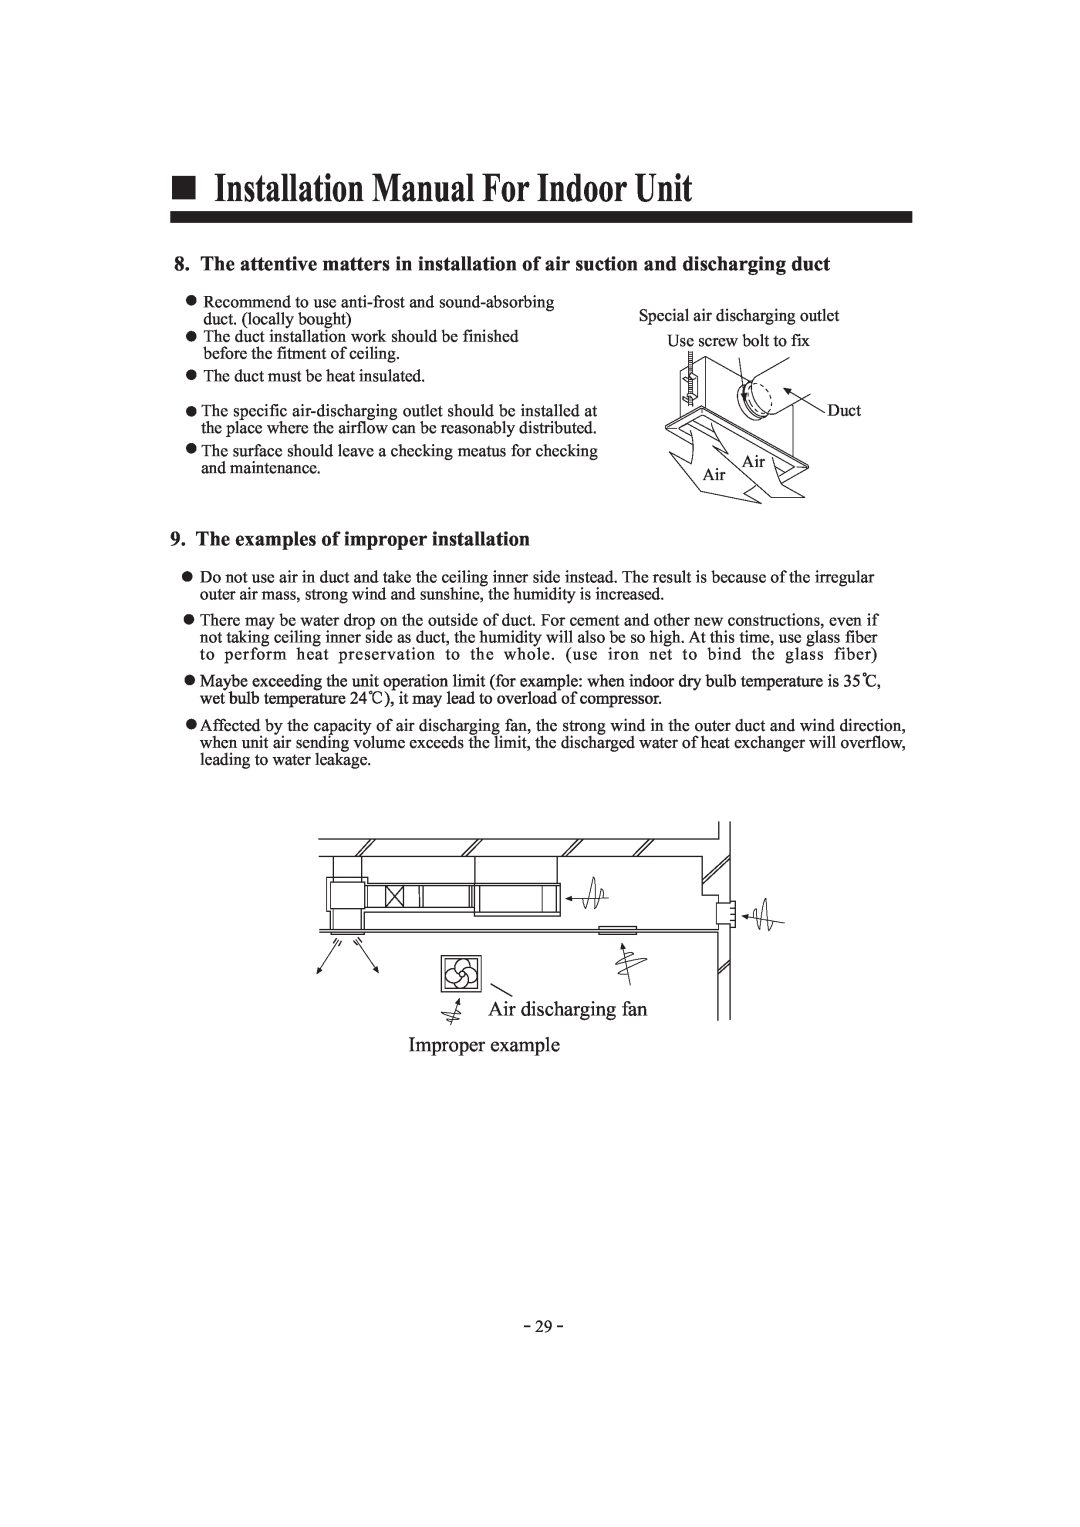 Haier HDU-42HF03/H installation manual The examples of improper installation, Installation Manual For Indoor Unit 